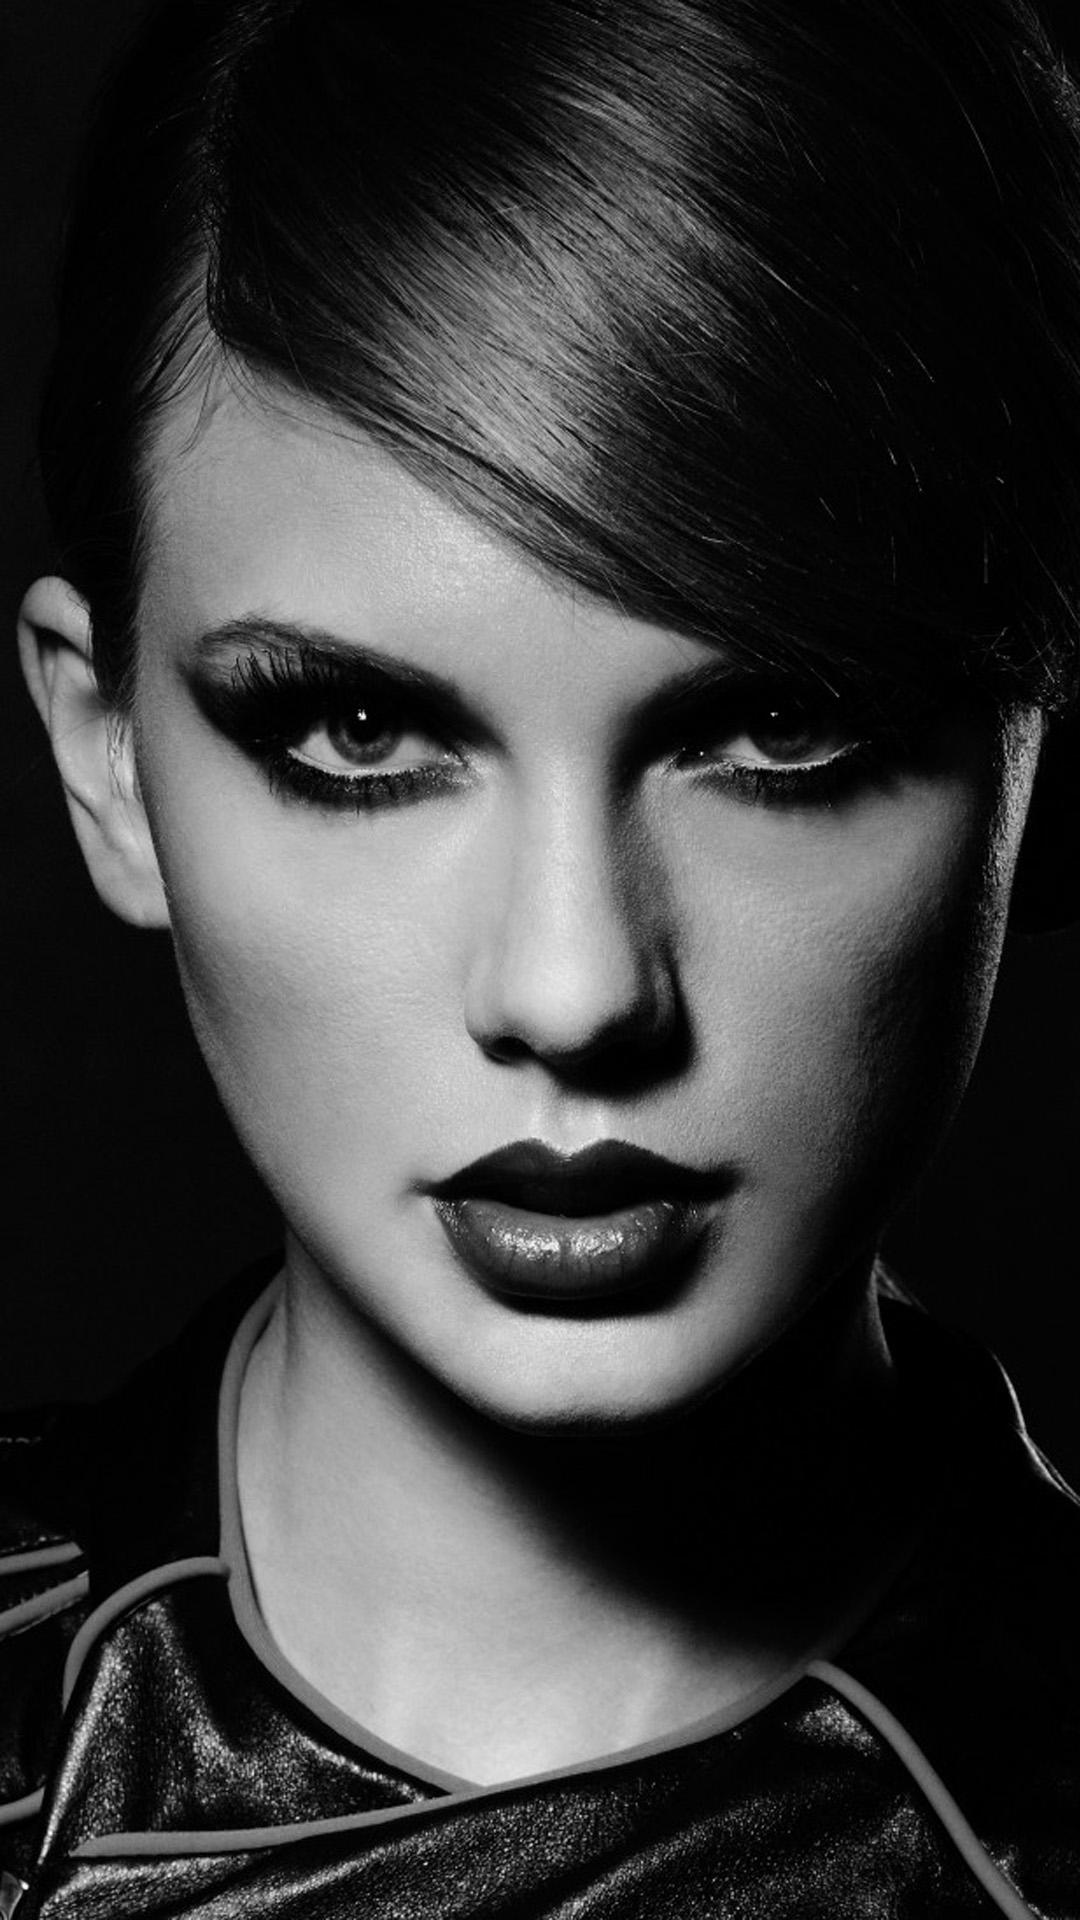 Taylor Swift Portrait Black & White Free 4K Ultra HD Mobile Wallpaper